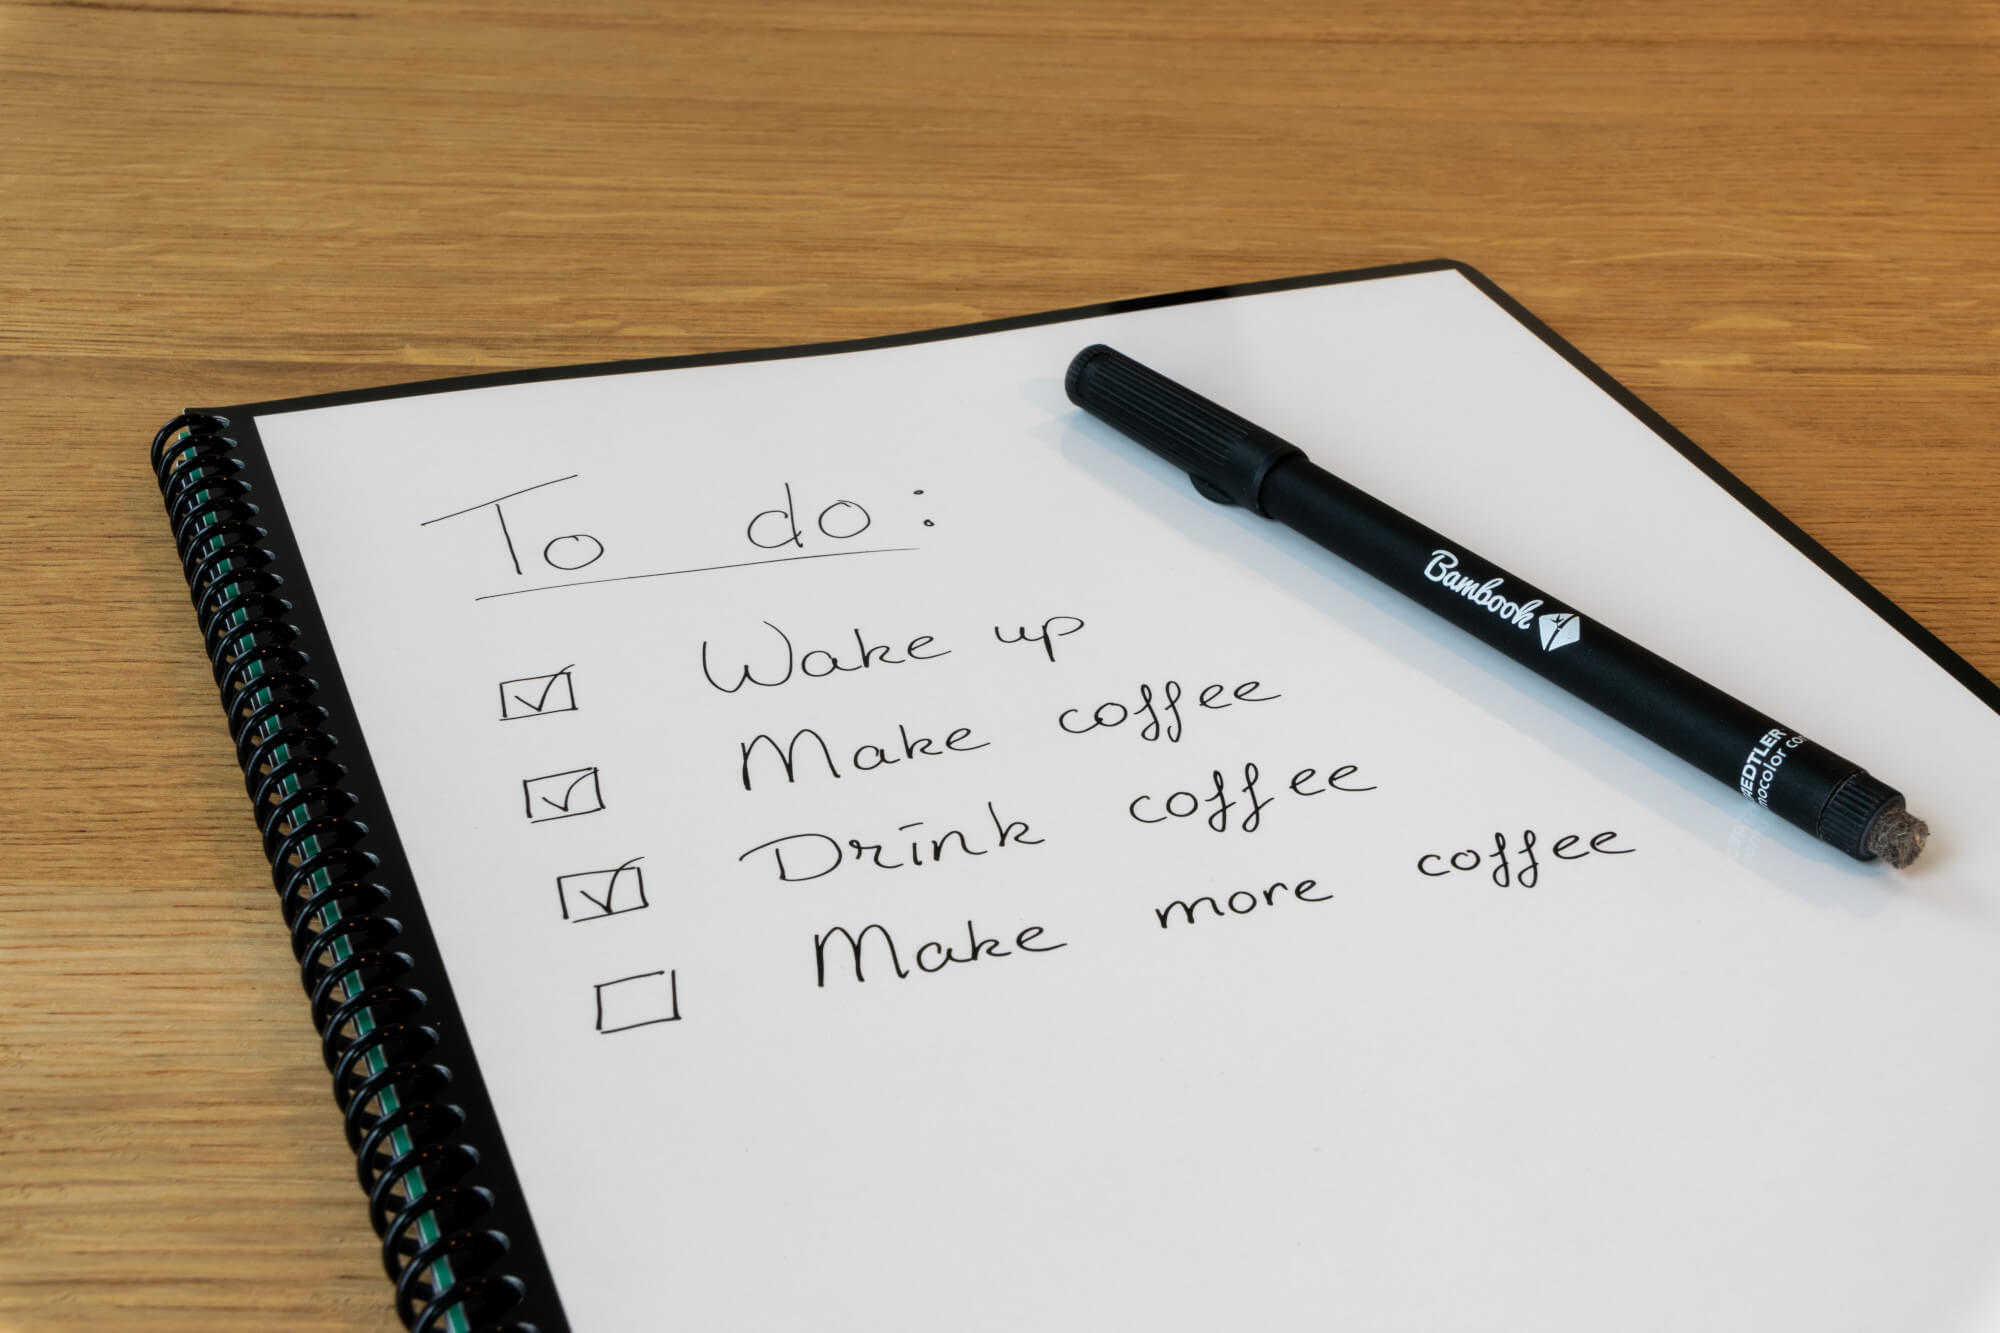 A simple checklist.